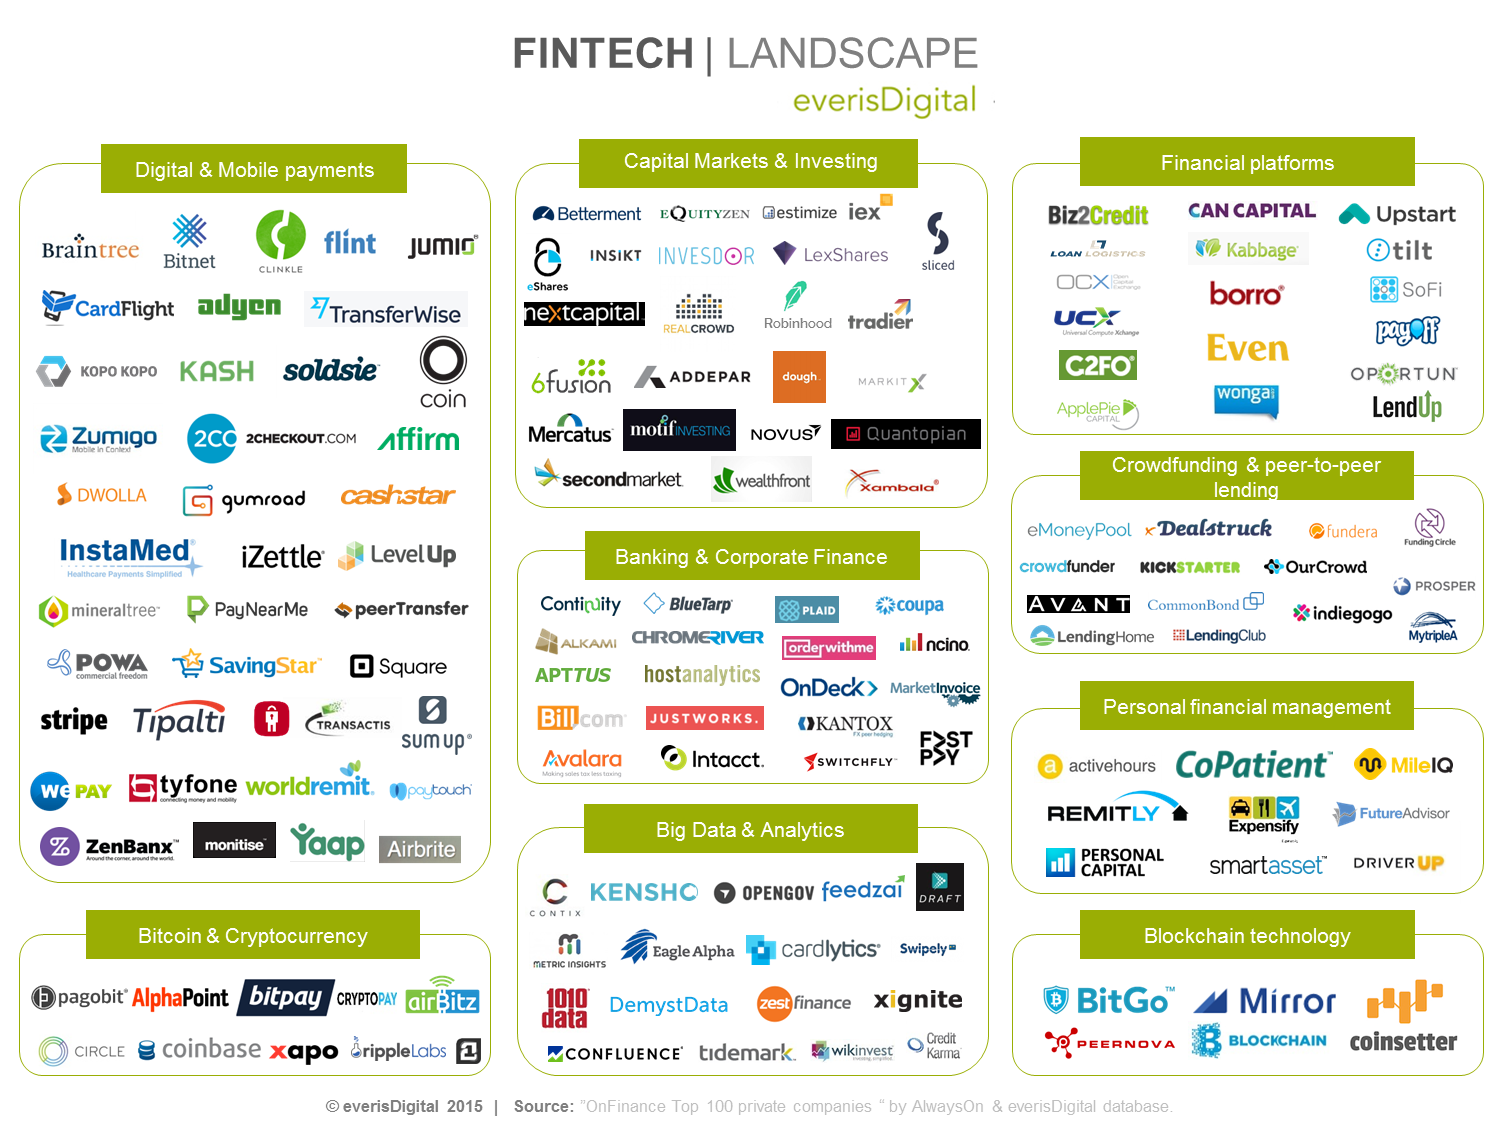 fintech-landscape-everisdigital-innovation-banking-2